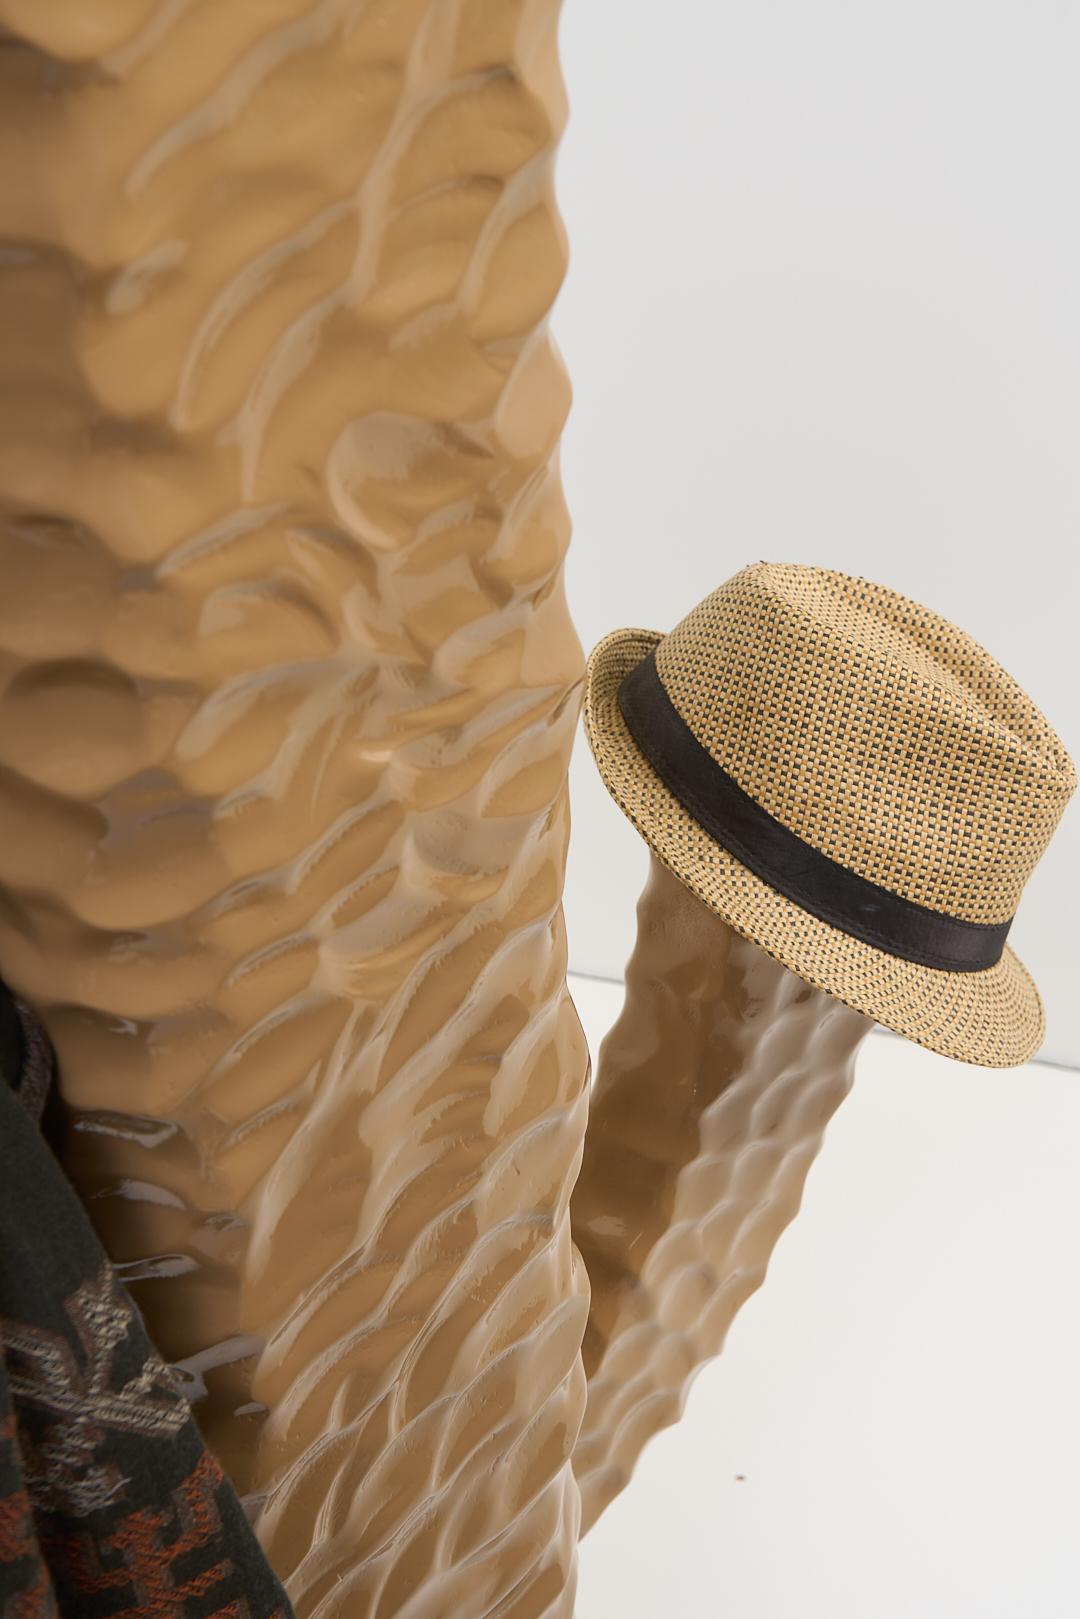 Mandacaru Series, Wooden Cactus Tall Floor Sculpture For Sale 11